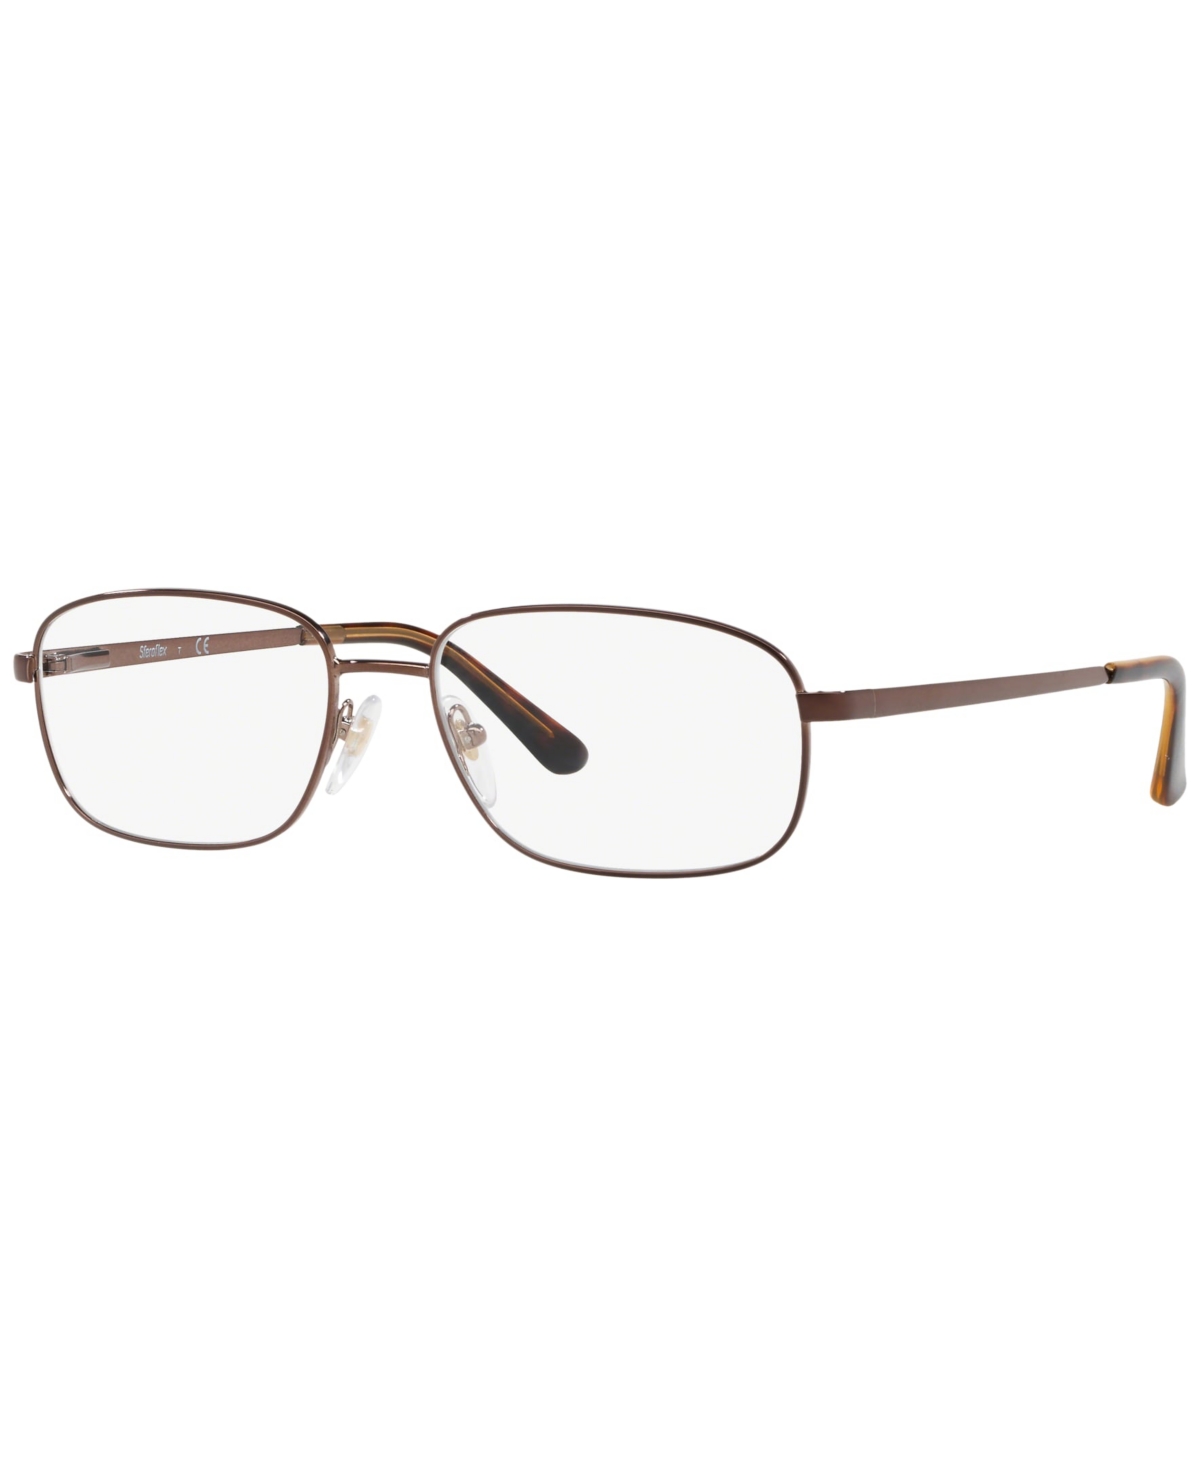 Steroflex Men's Eyeglasses, SF2290 - Brown